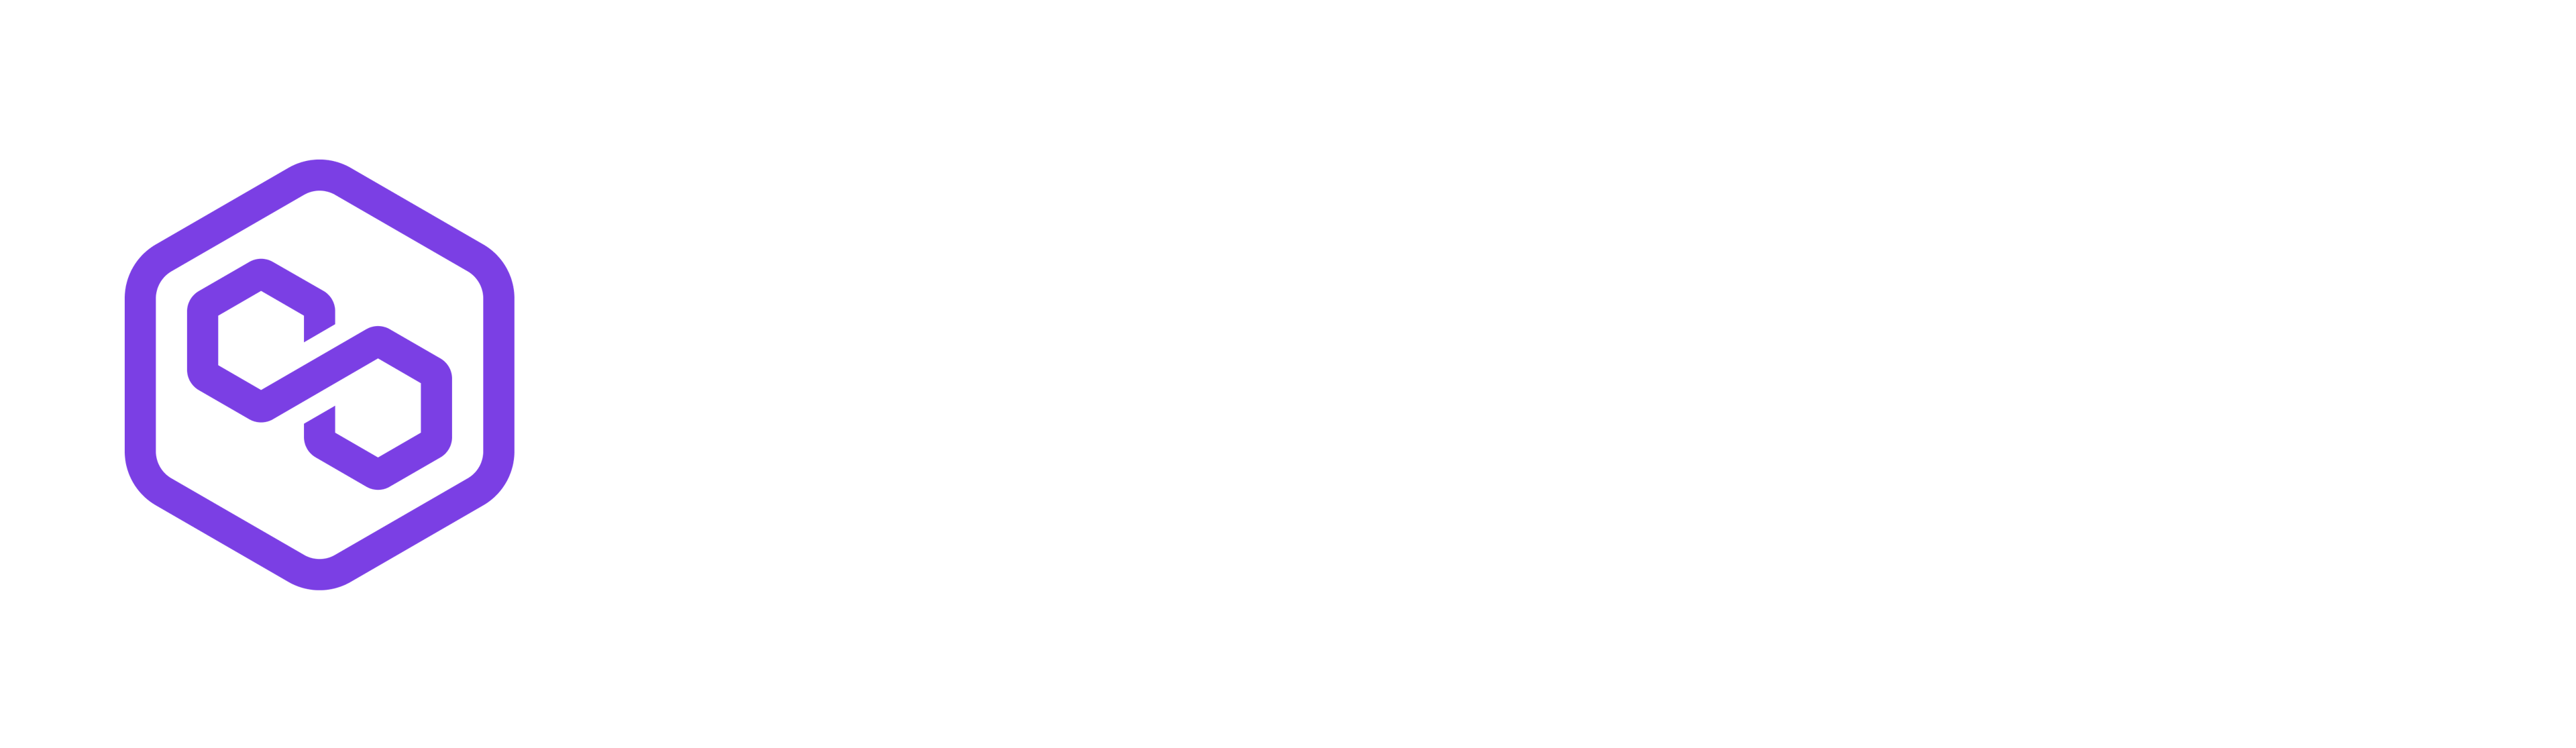 Polygon PoS